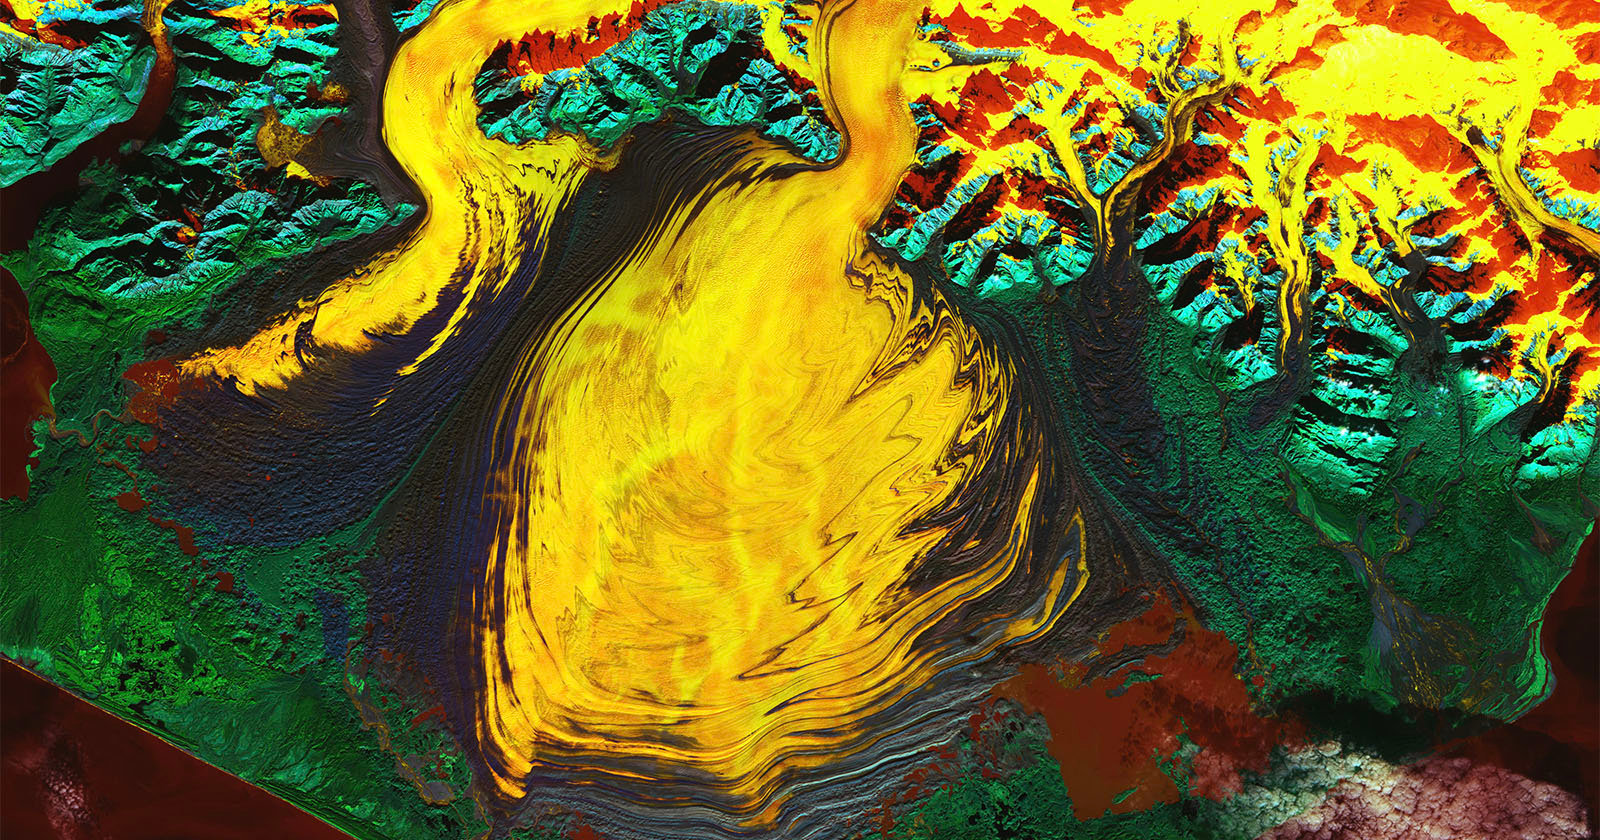  nasa satellite image technicolor portrait climate crisis 